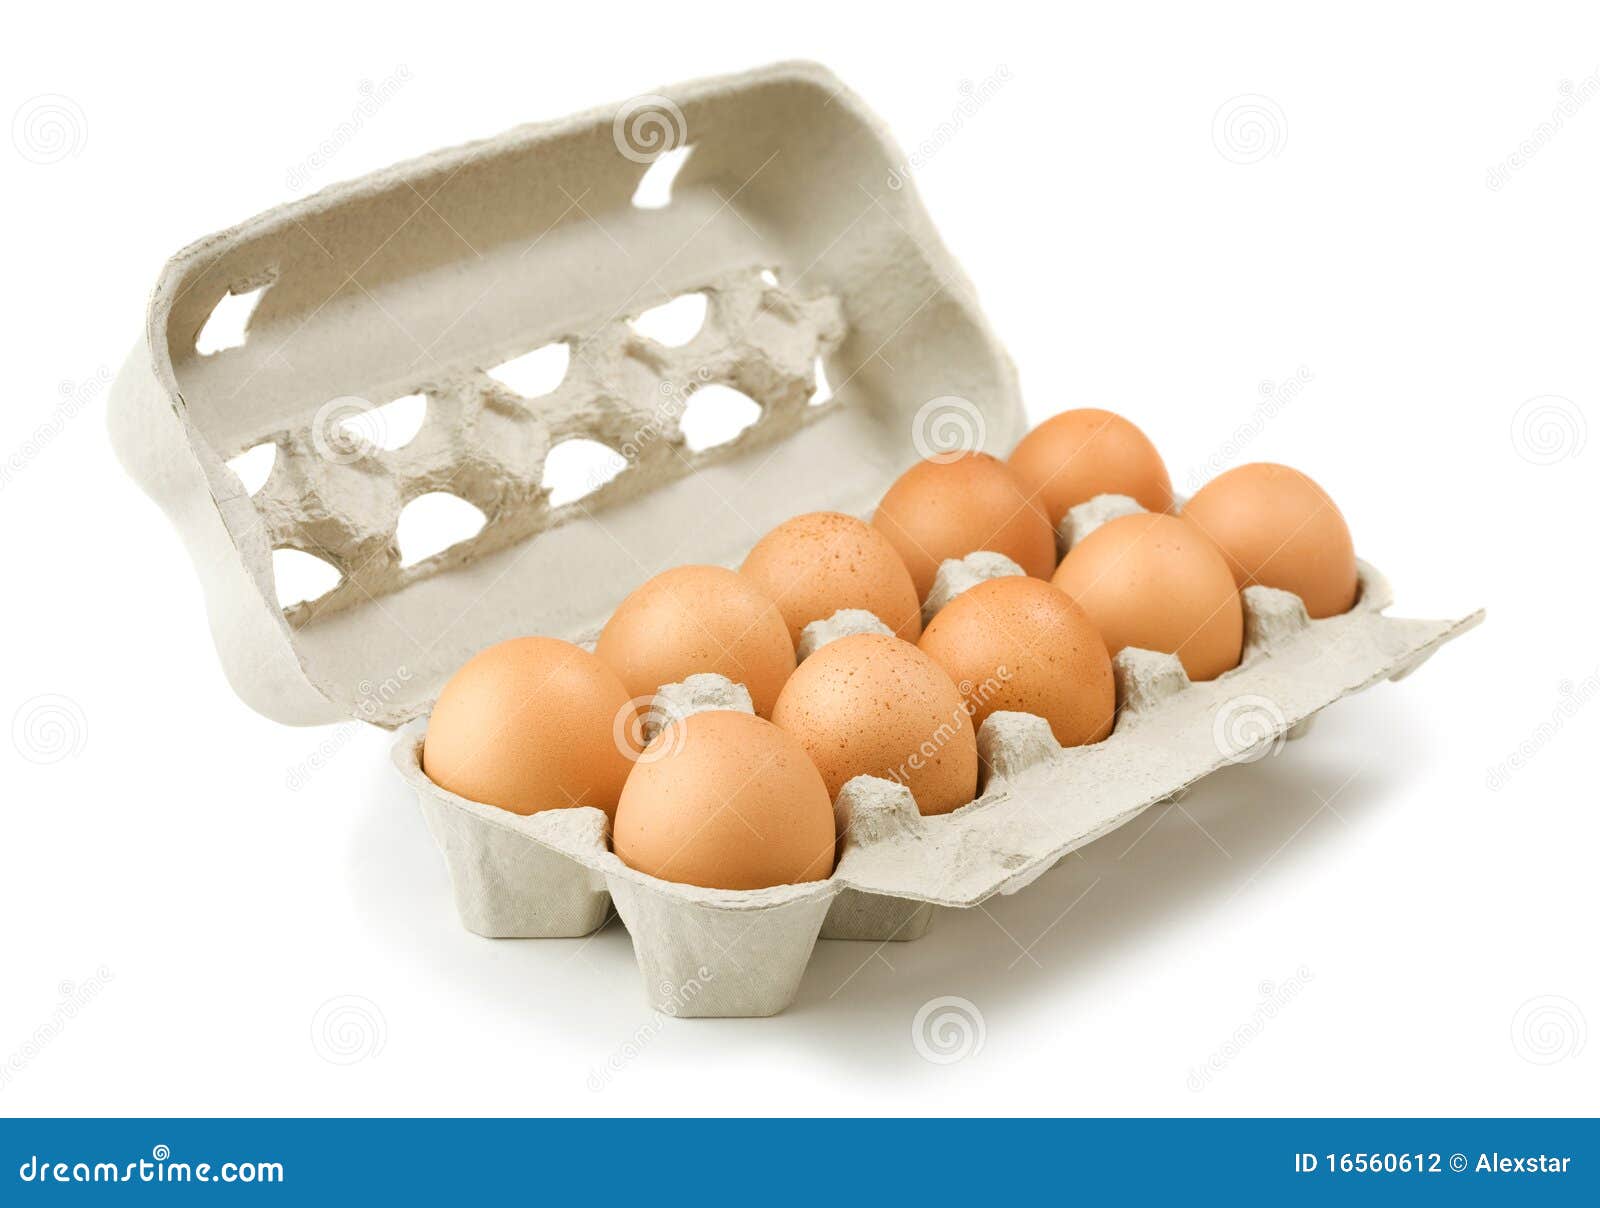 cartn-de-huevos-16560612.jpg